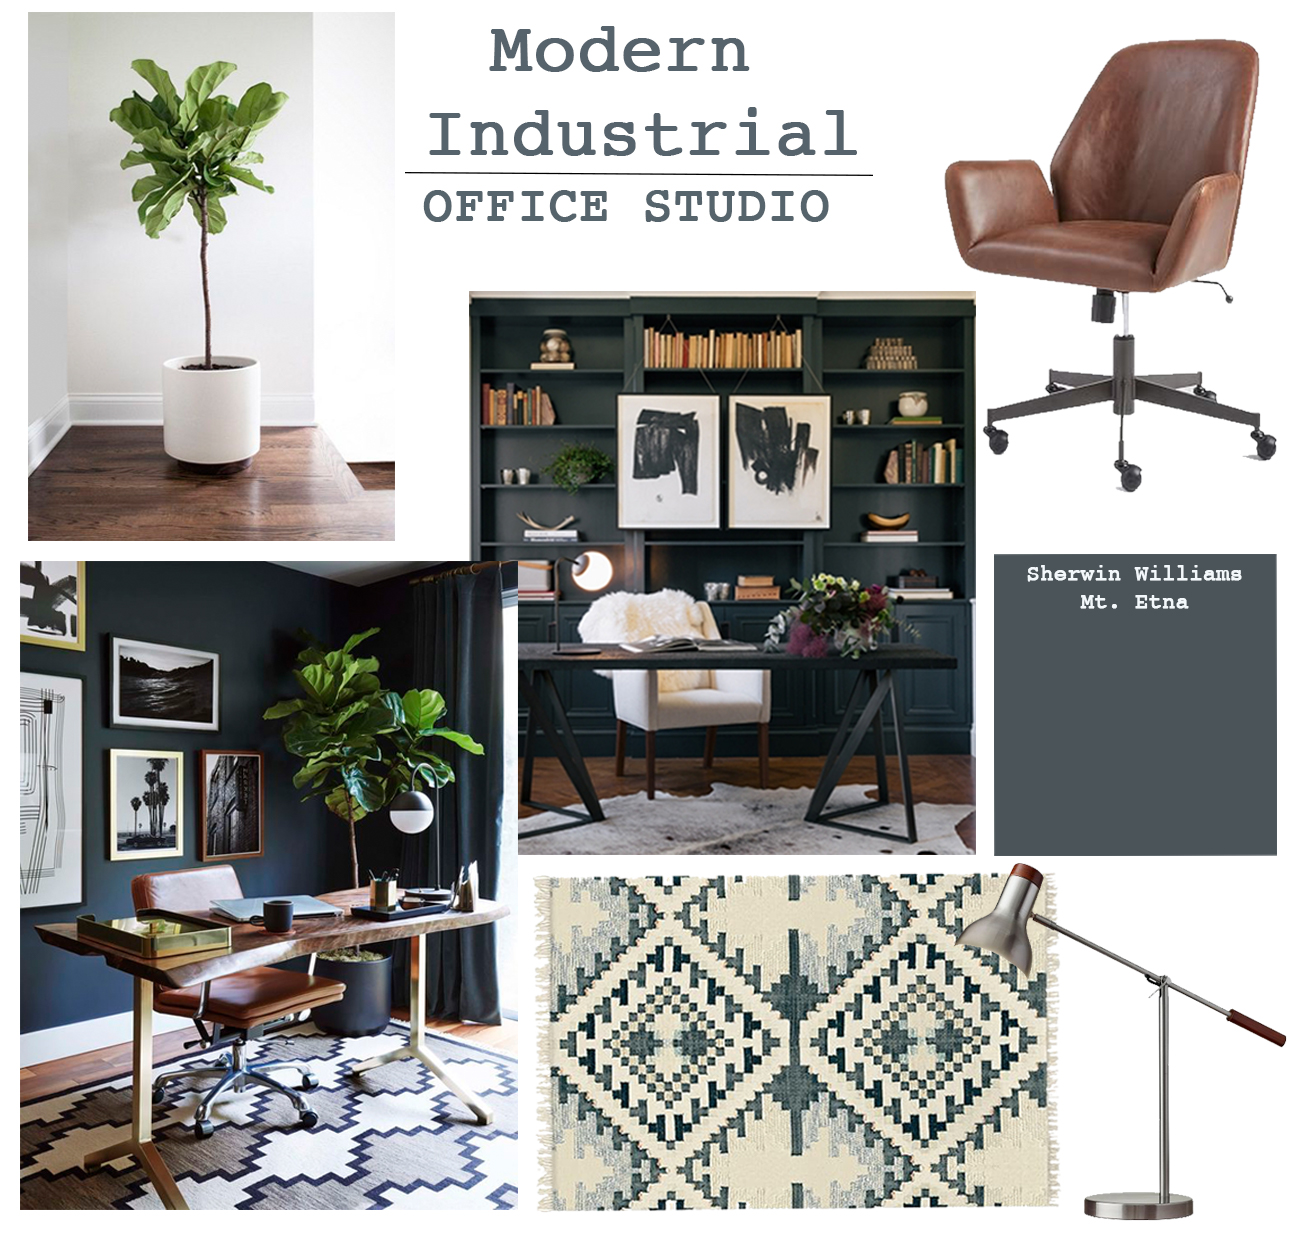 Studio Office Design: Modern Industrial